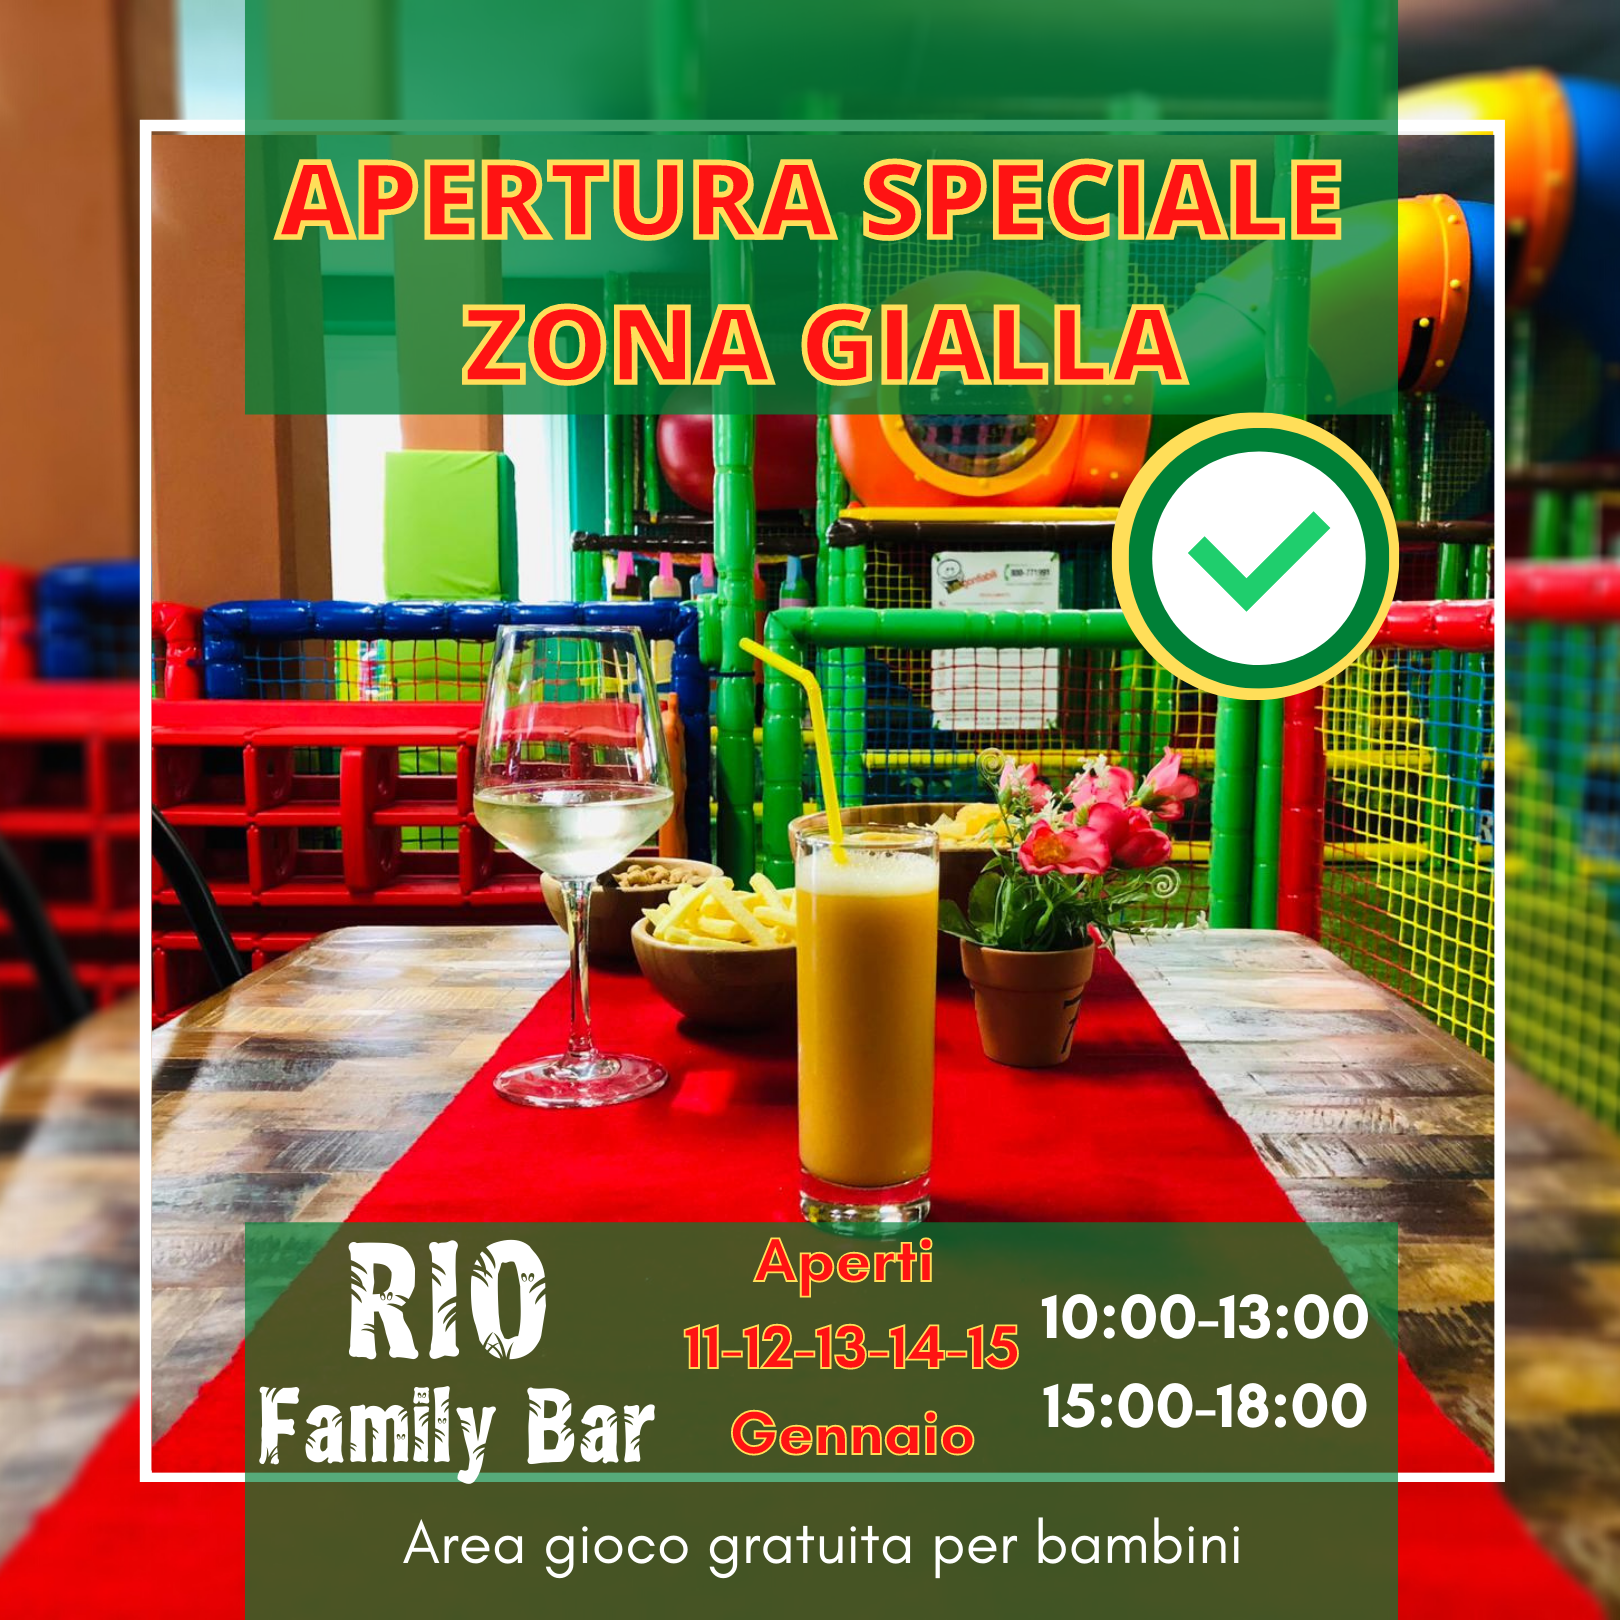 Apertura "Zona Gialla" - Riò Family Bar